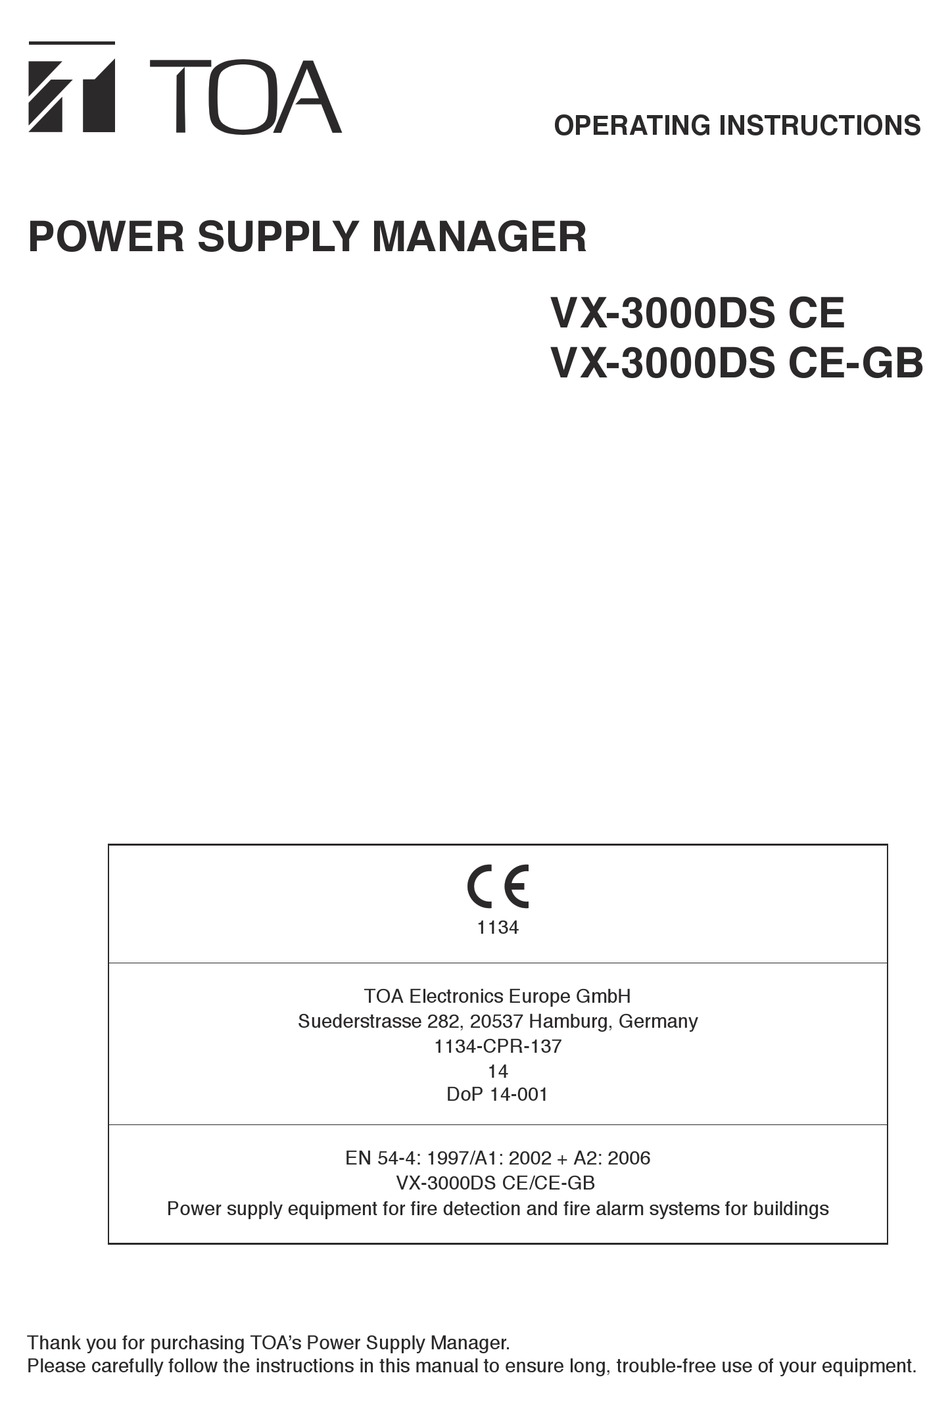 Toa Vx 3000ds Ce Operating Instructions Manual Pdf Download Manualslib